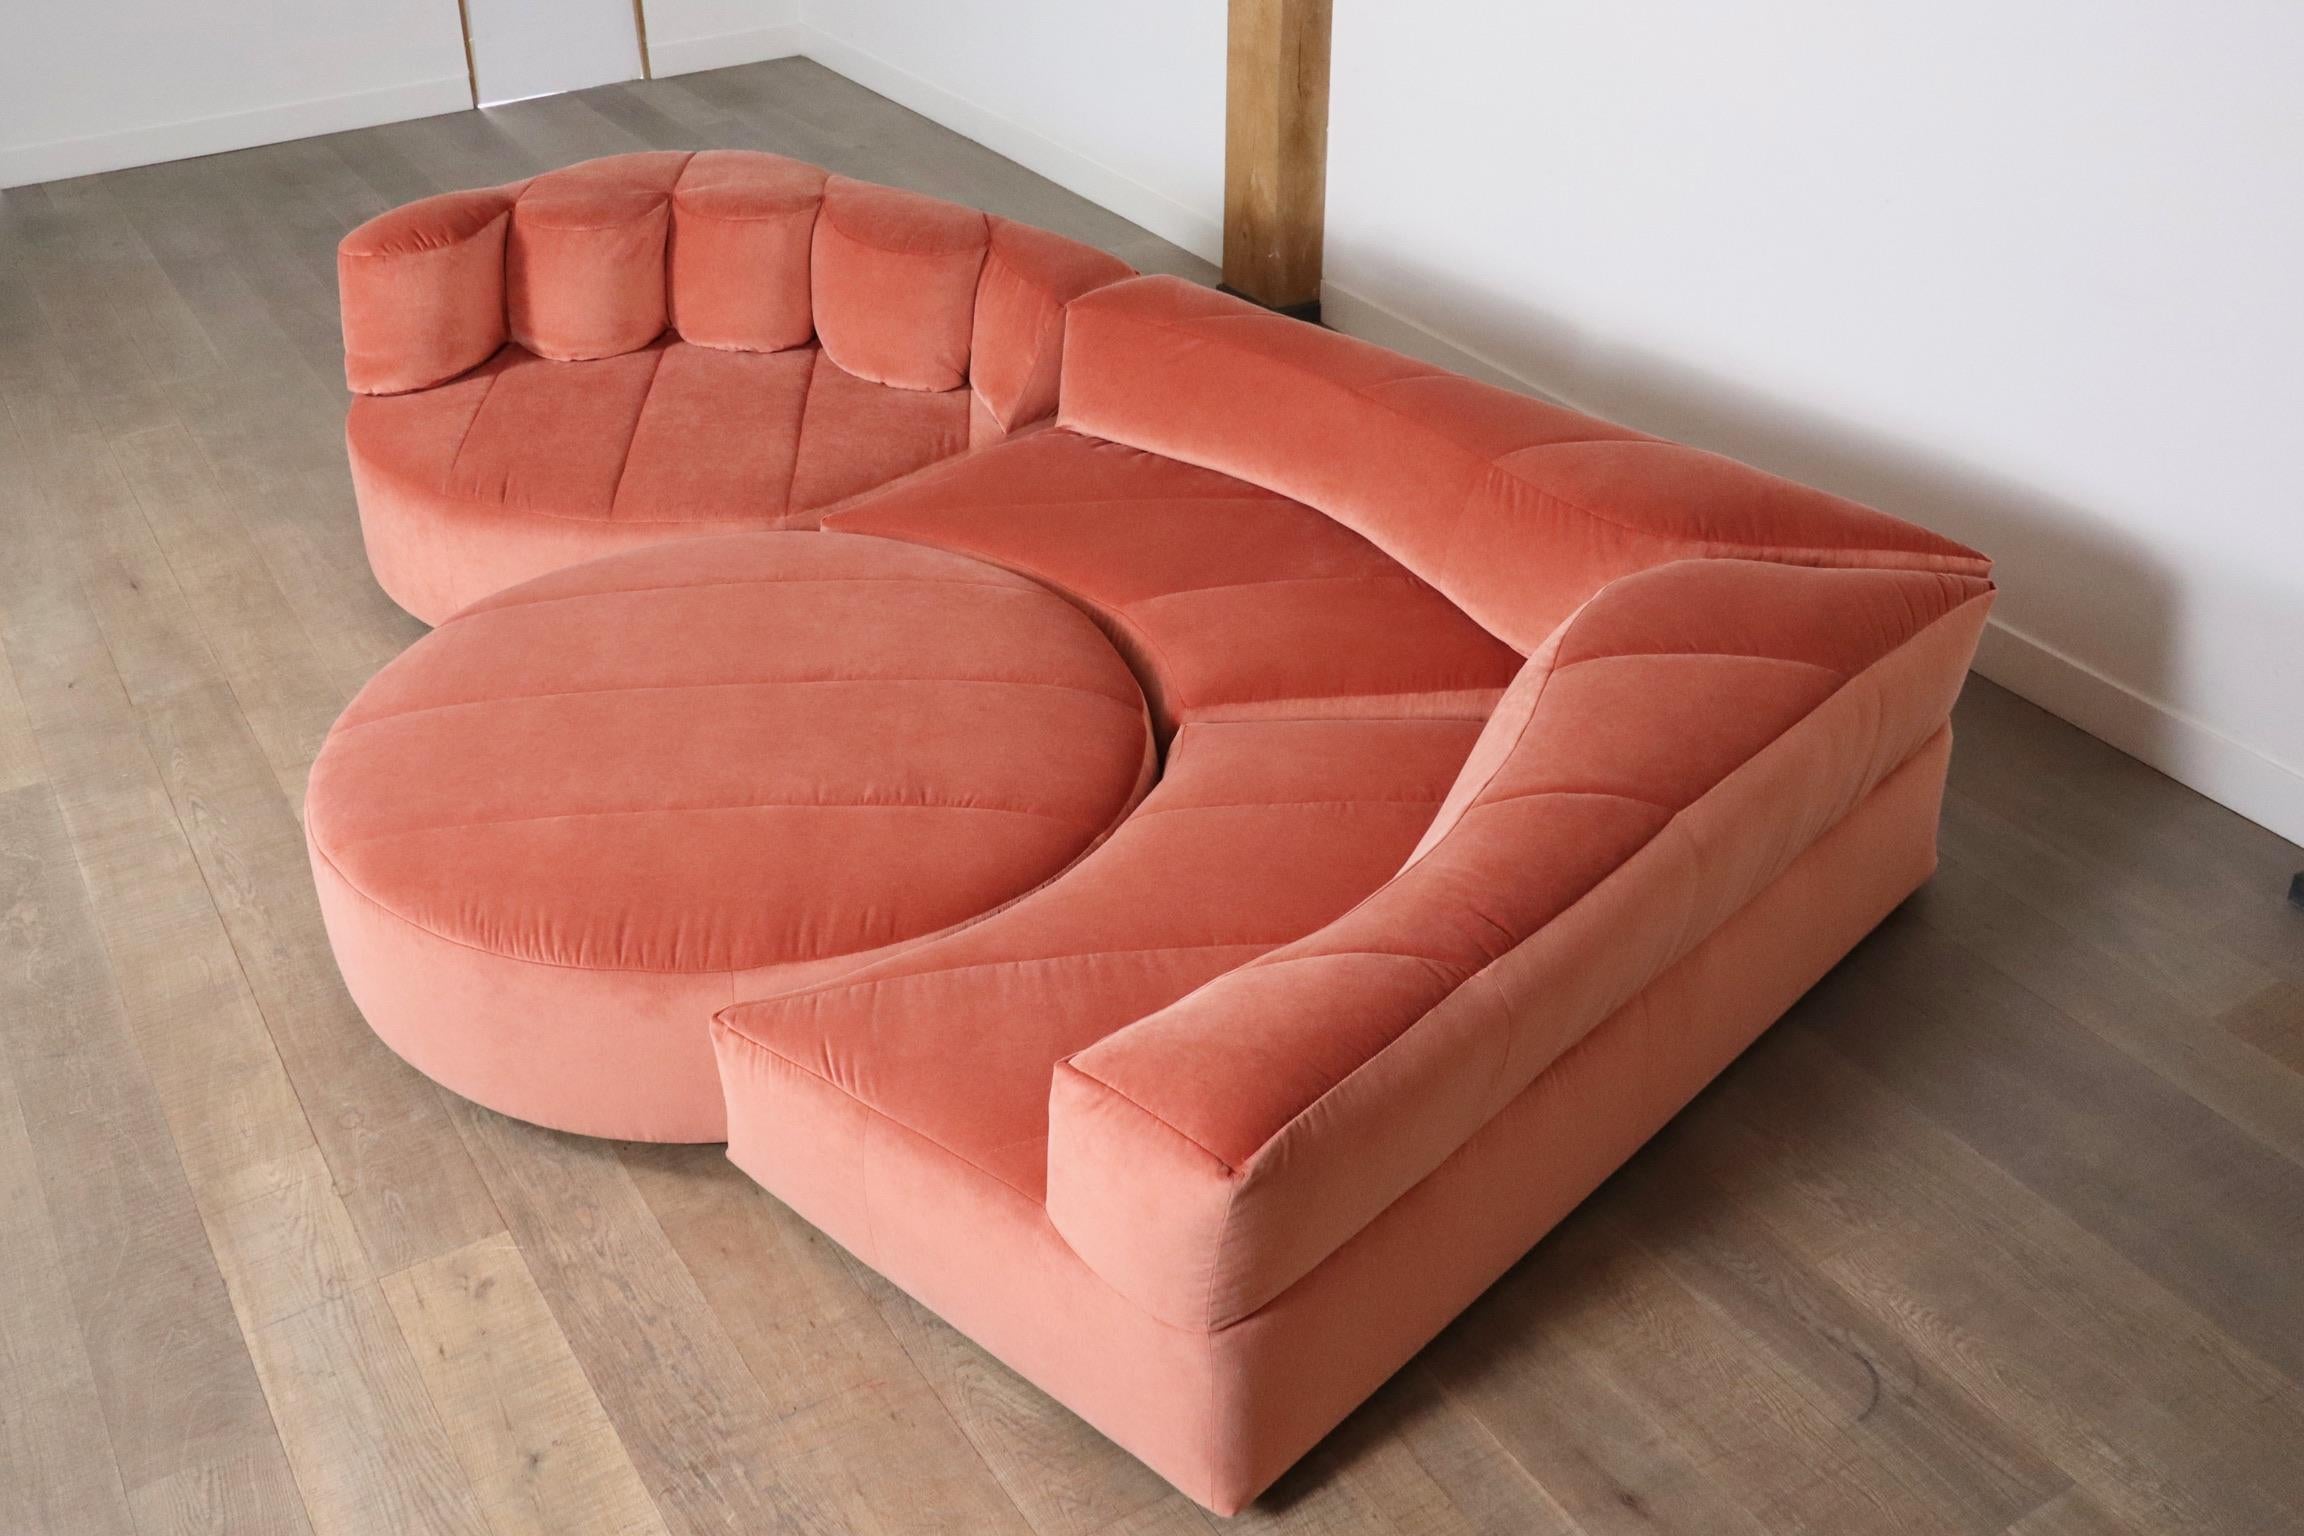 Late 20th Century Roche Bobois “Paysage” Sofa In Coral Velvet By Hans Hopfer For Roche Bobois 1974